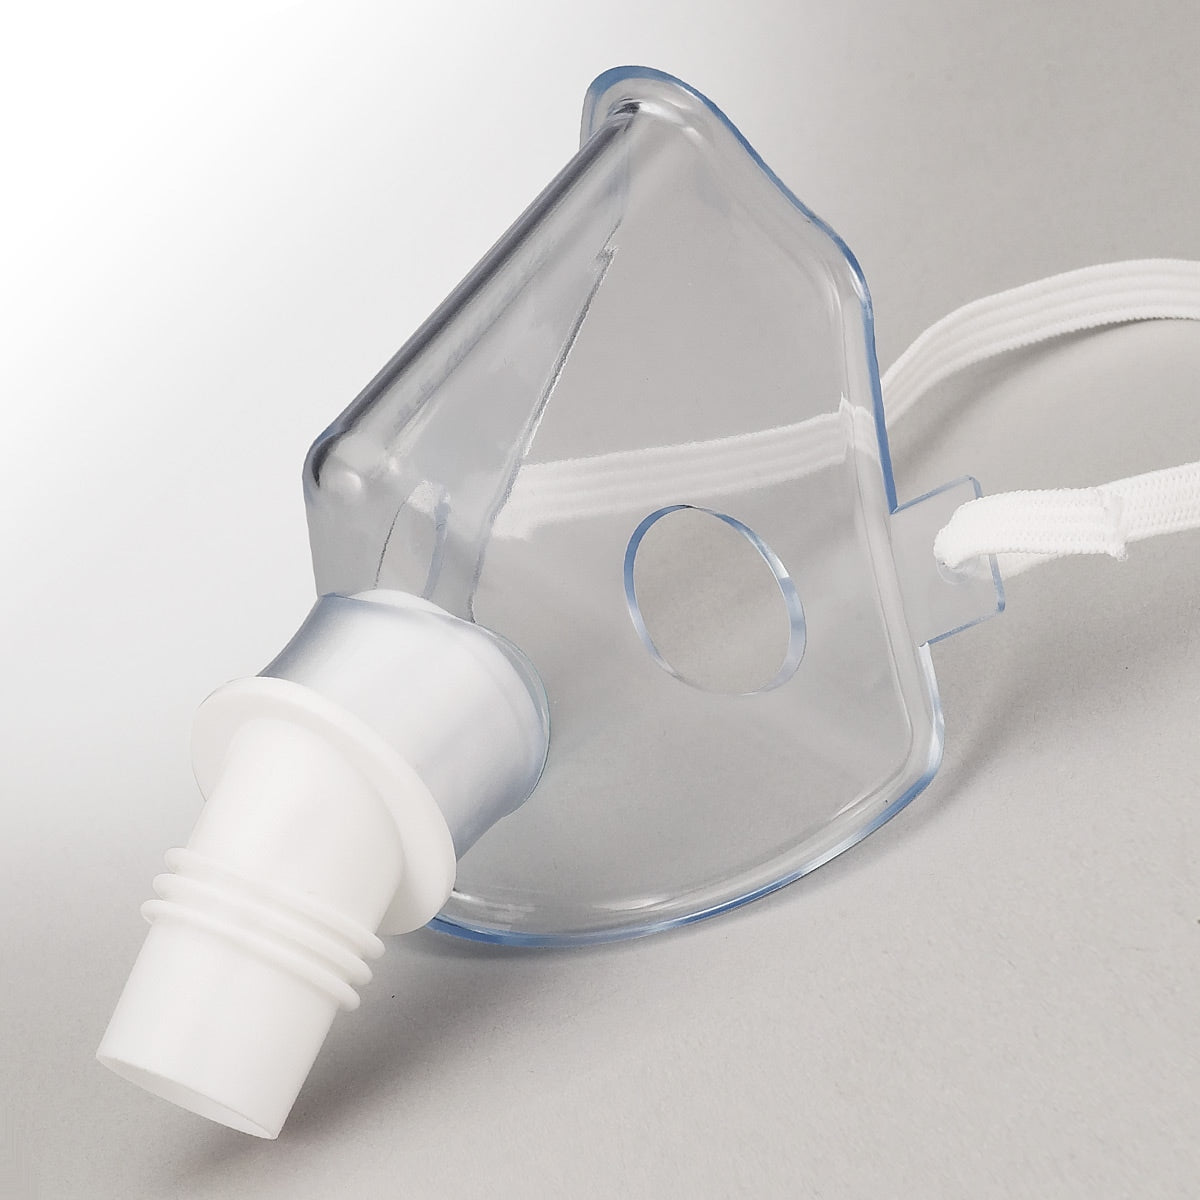 Philips Respironics SideStream Pediatric Nebulizer Mask - No Insurance Medical Supplies